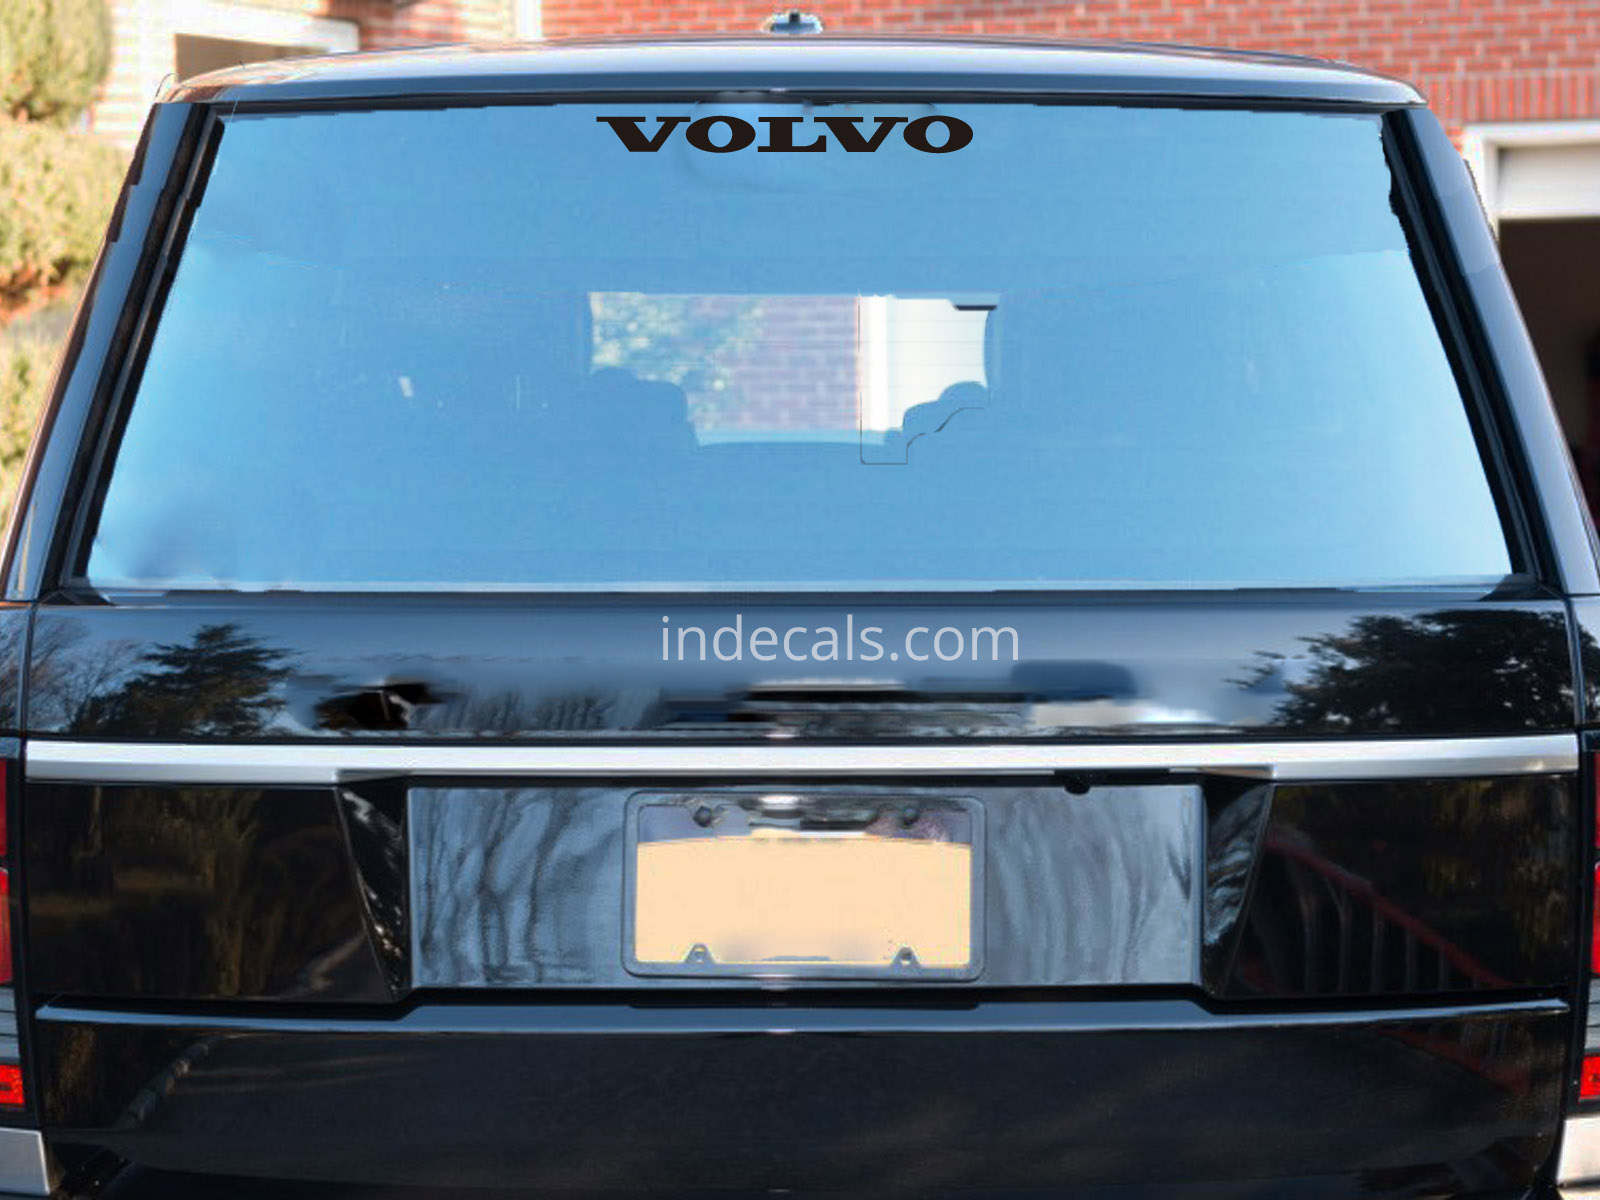 1 x Volvo Sticker for Windshield or Back Window - Black